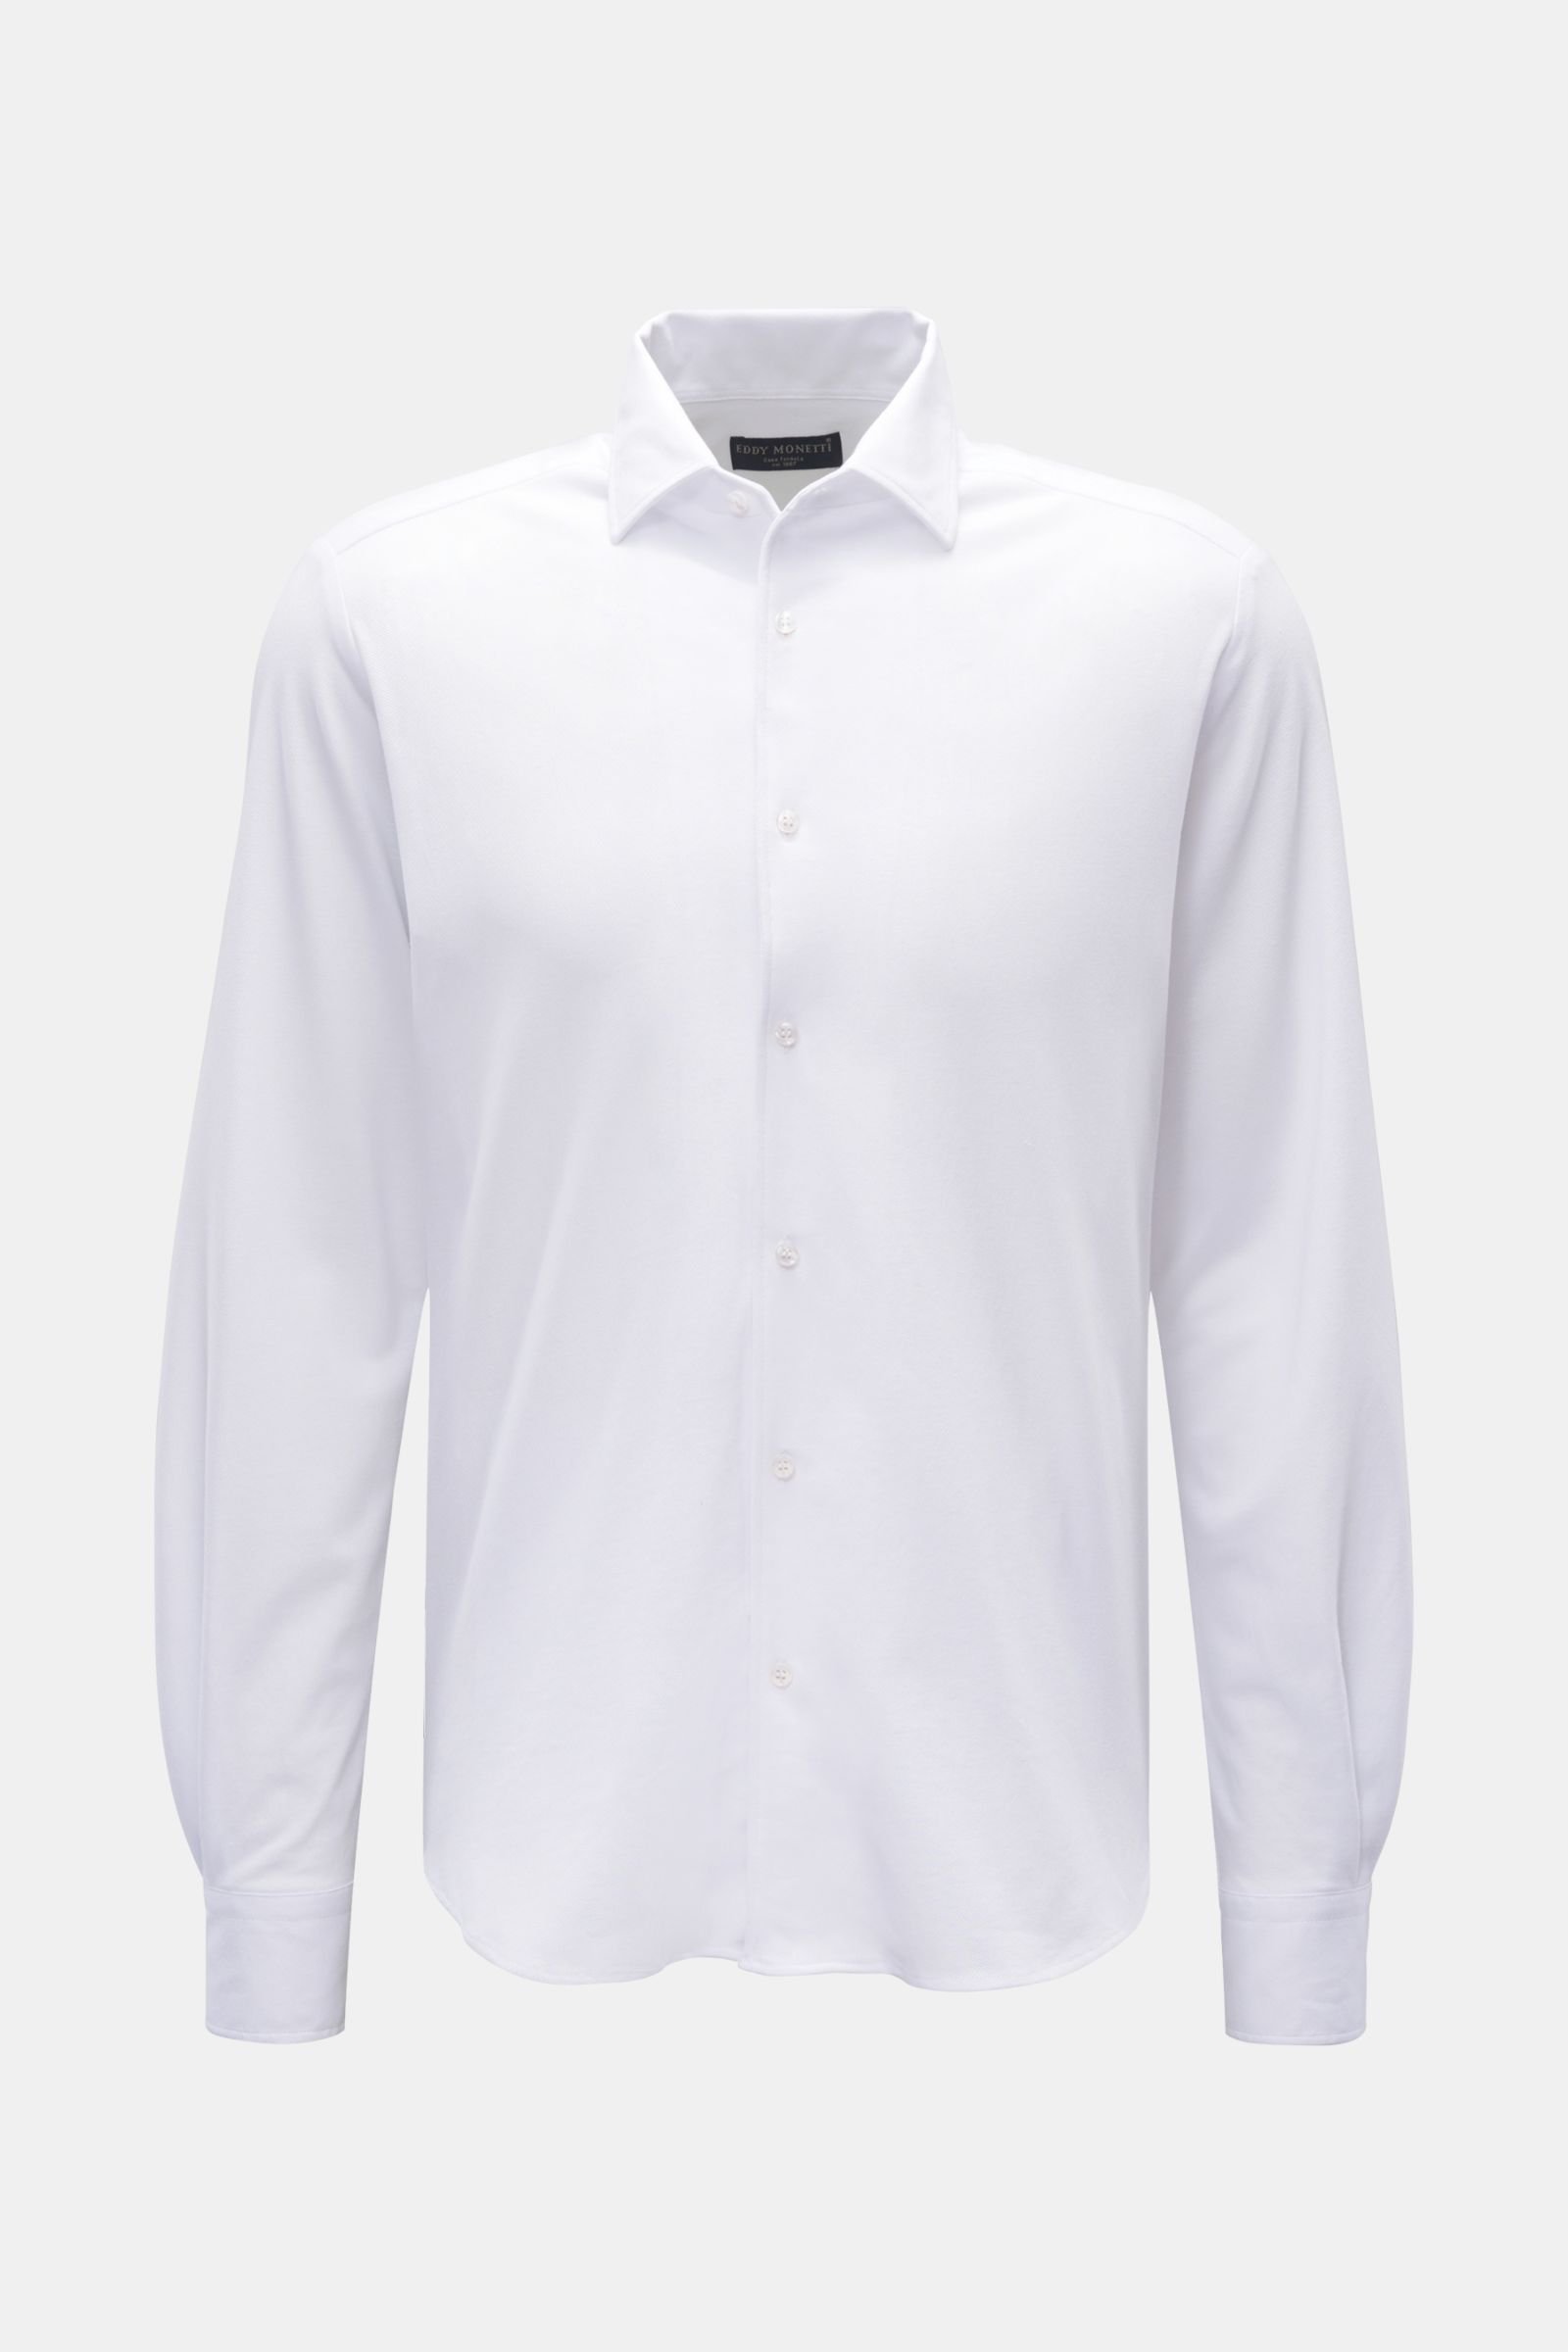 Oxford shirt narrow collar white